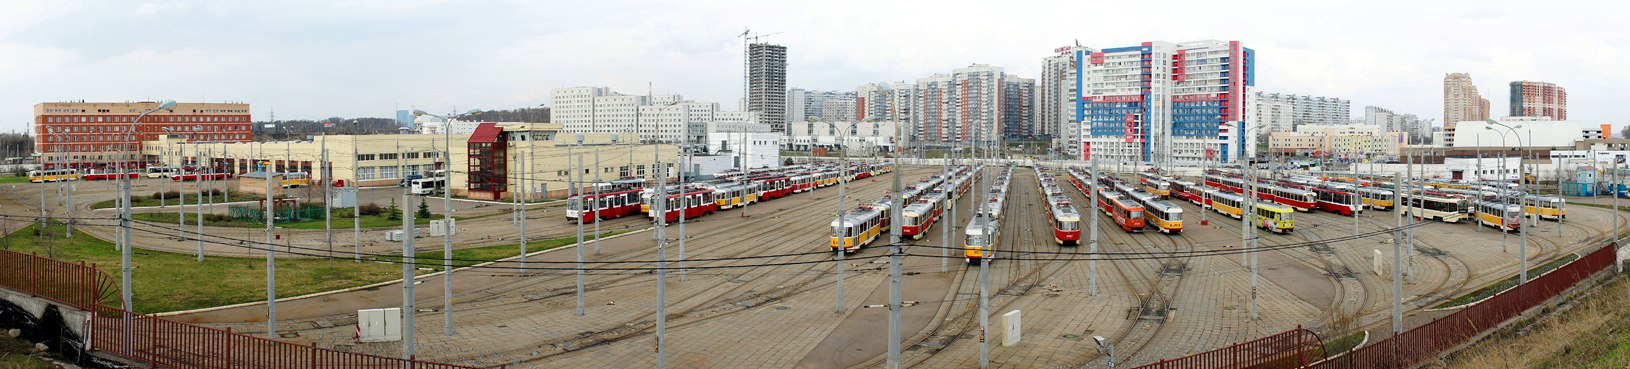 Moskwa — Tram depots: [3] Krasnopresnenskoye. New site in Strogino; Moskwa — Views from a height